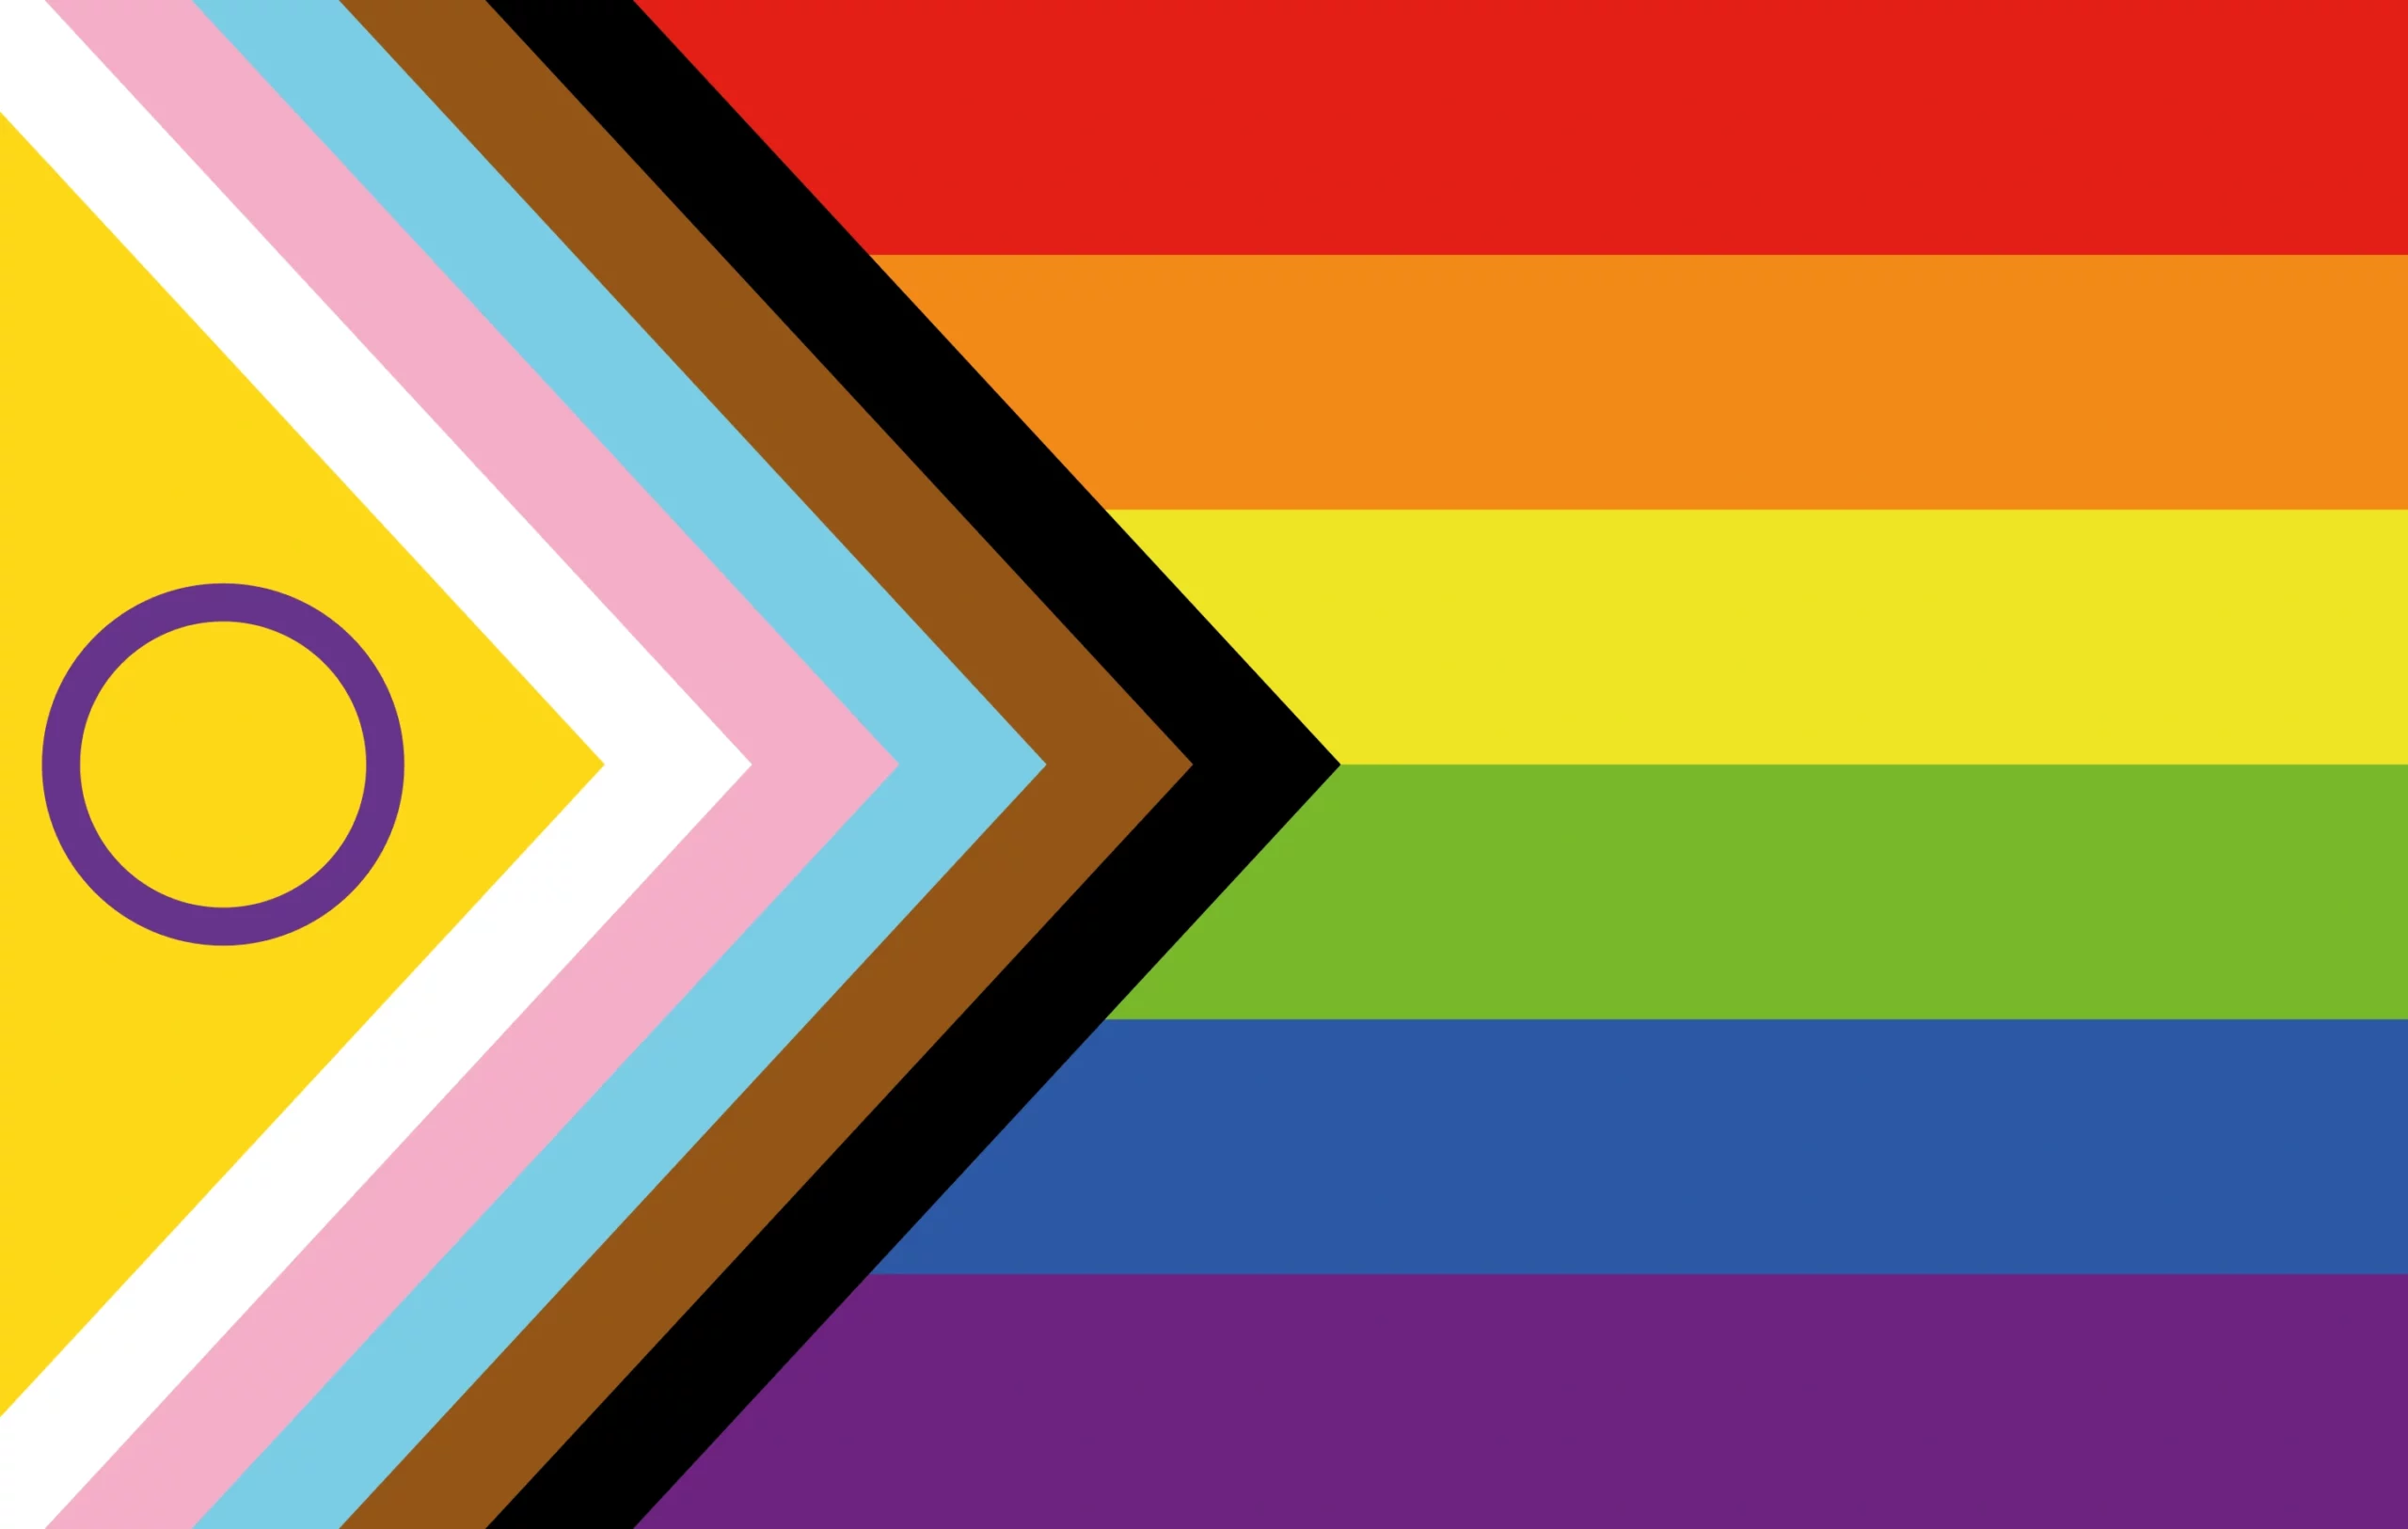 Intersex-inclusive LGBTQ+ Pride Flag from 2021